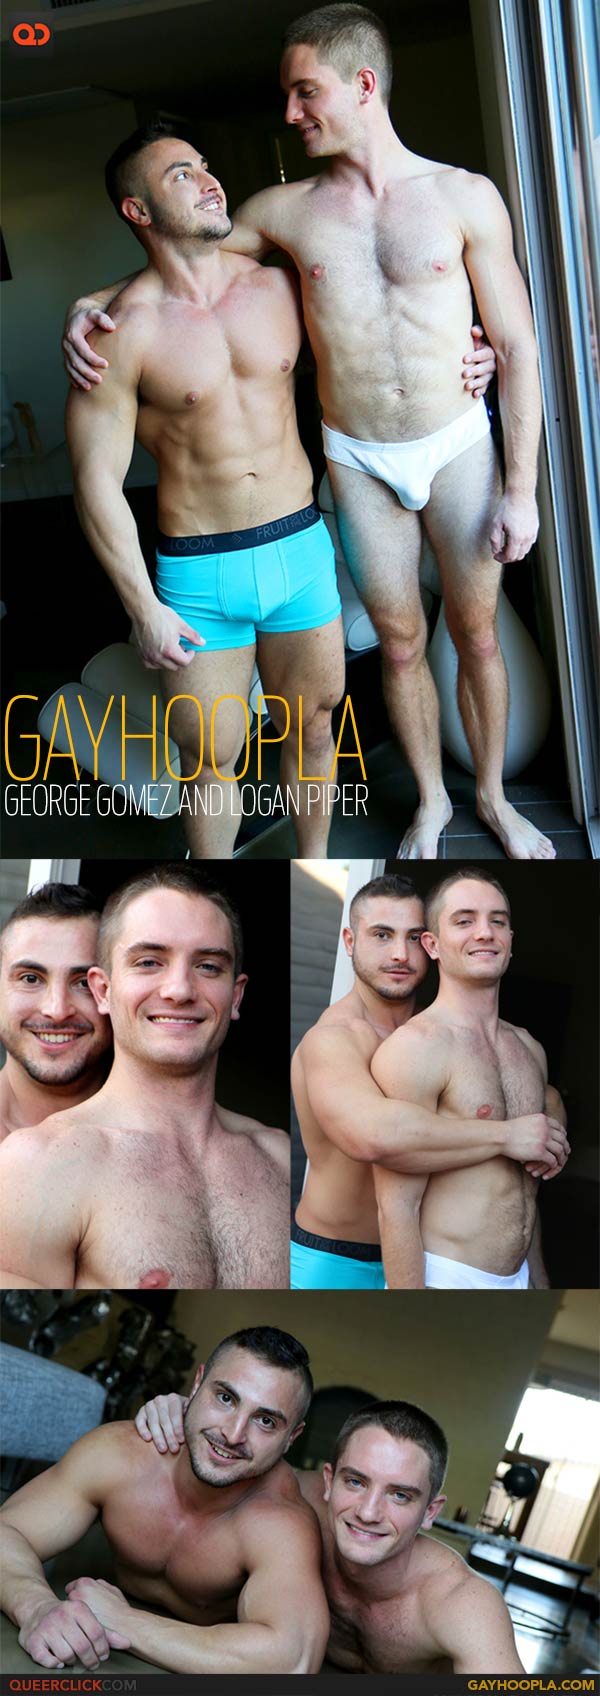 GayHoopla: George Gomez and Logan Piper